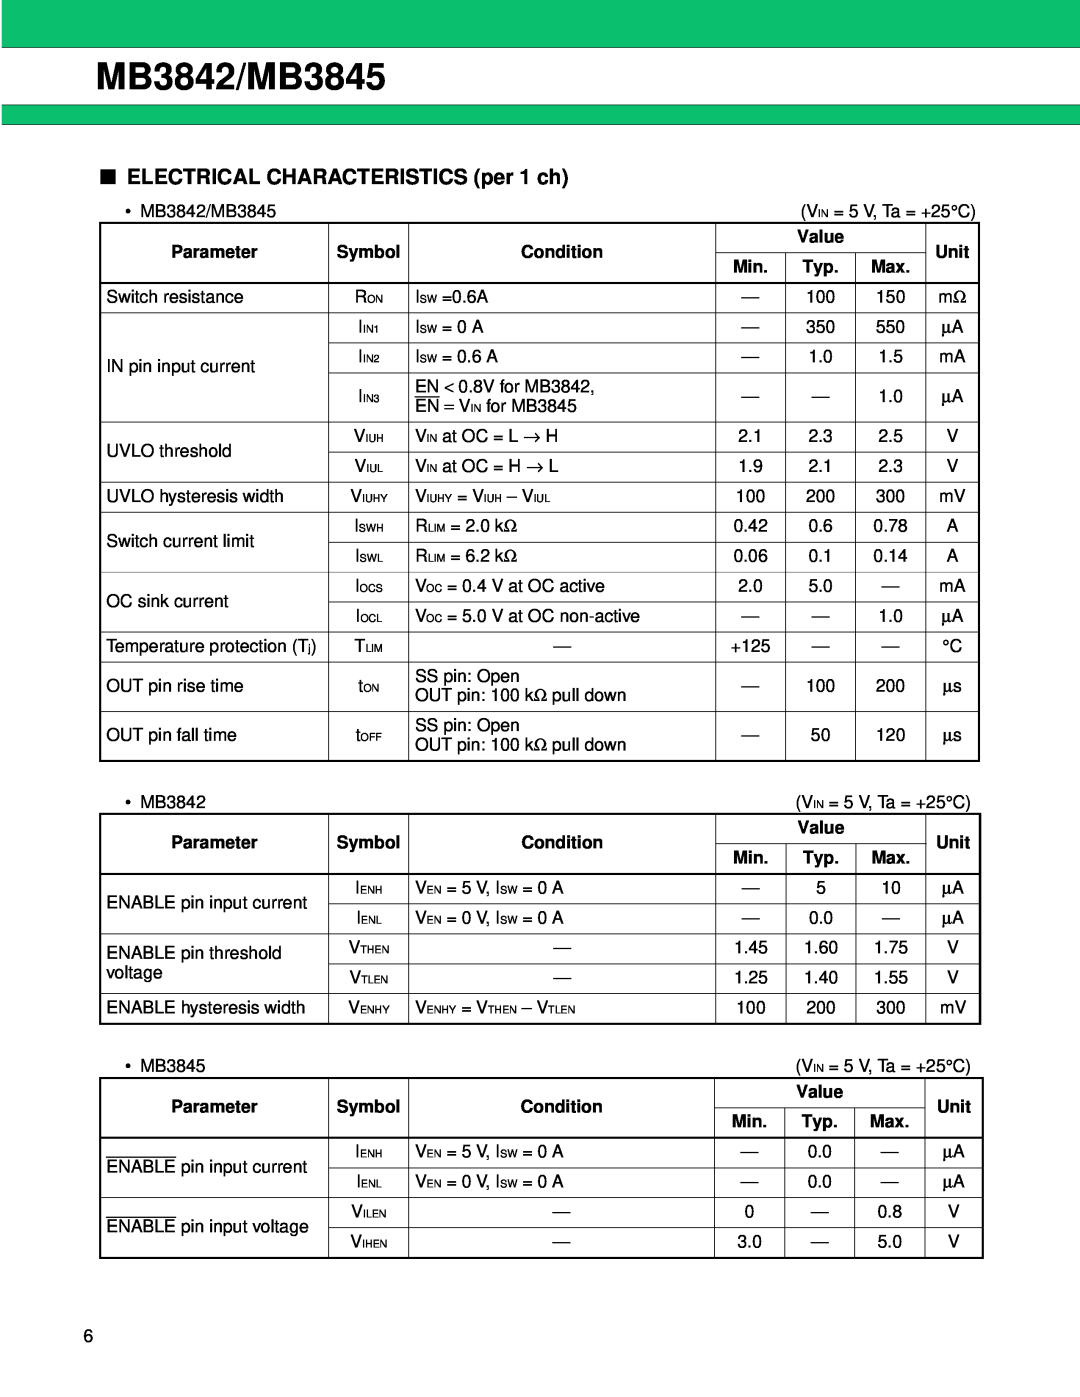 Fujitsu manual ELECTRICAL CHARACTERISTICS per 1 ch, MB3842/MB3845 